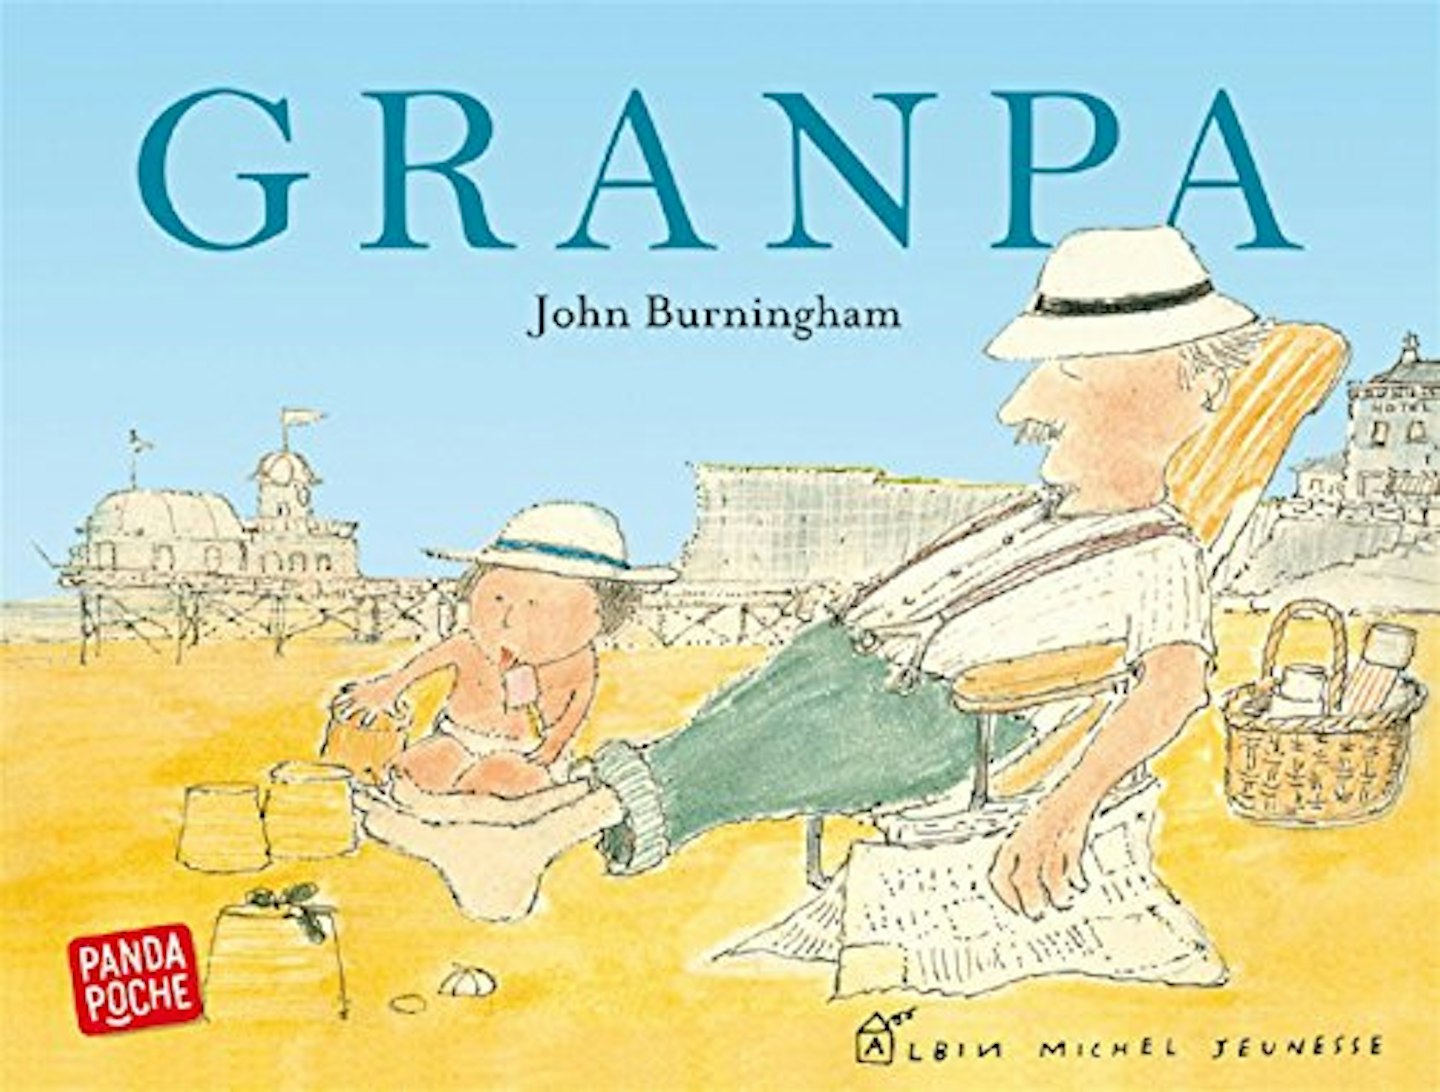 Granpa by John Burningham